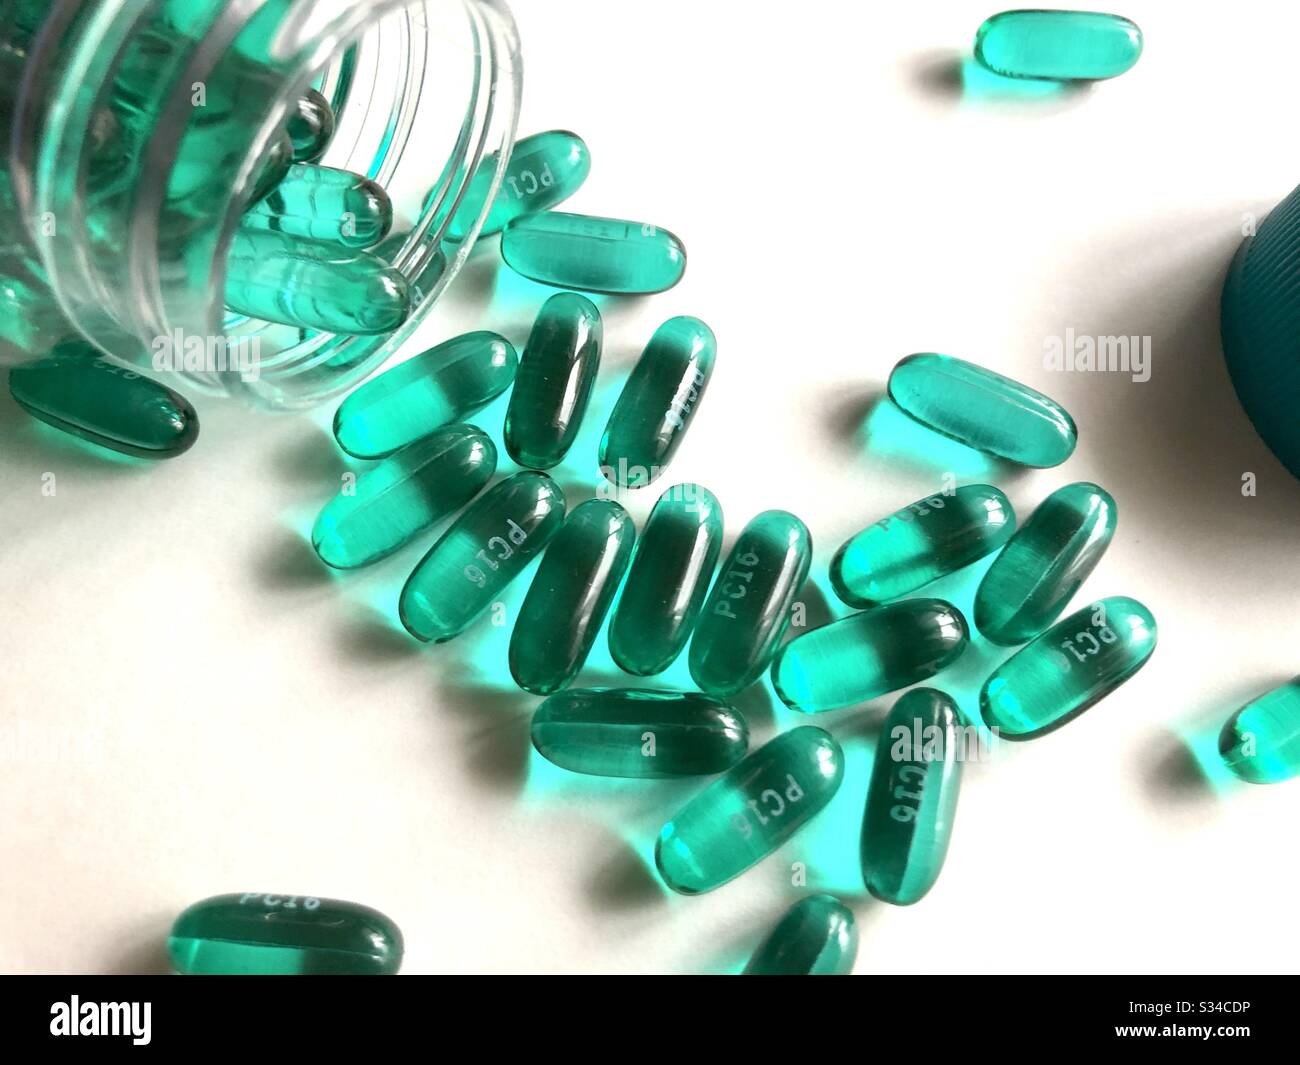 Ibuprofen gel caps on a white background Stock Photo - Alamy